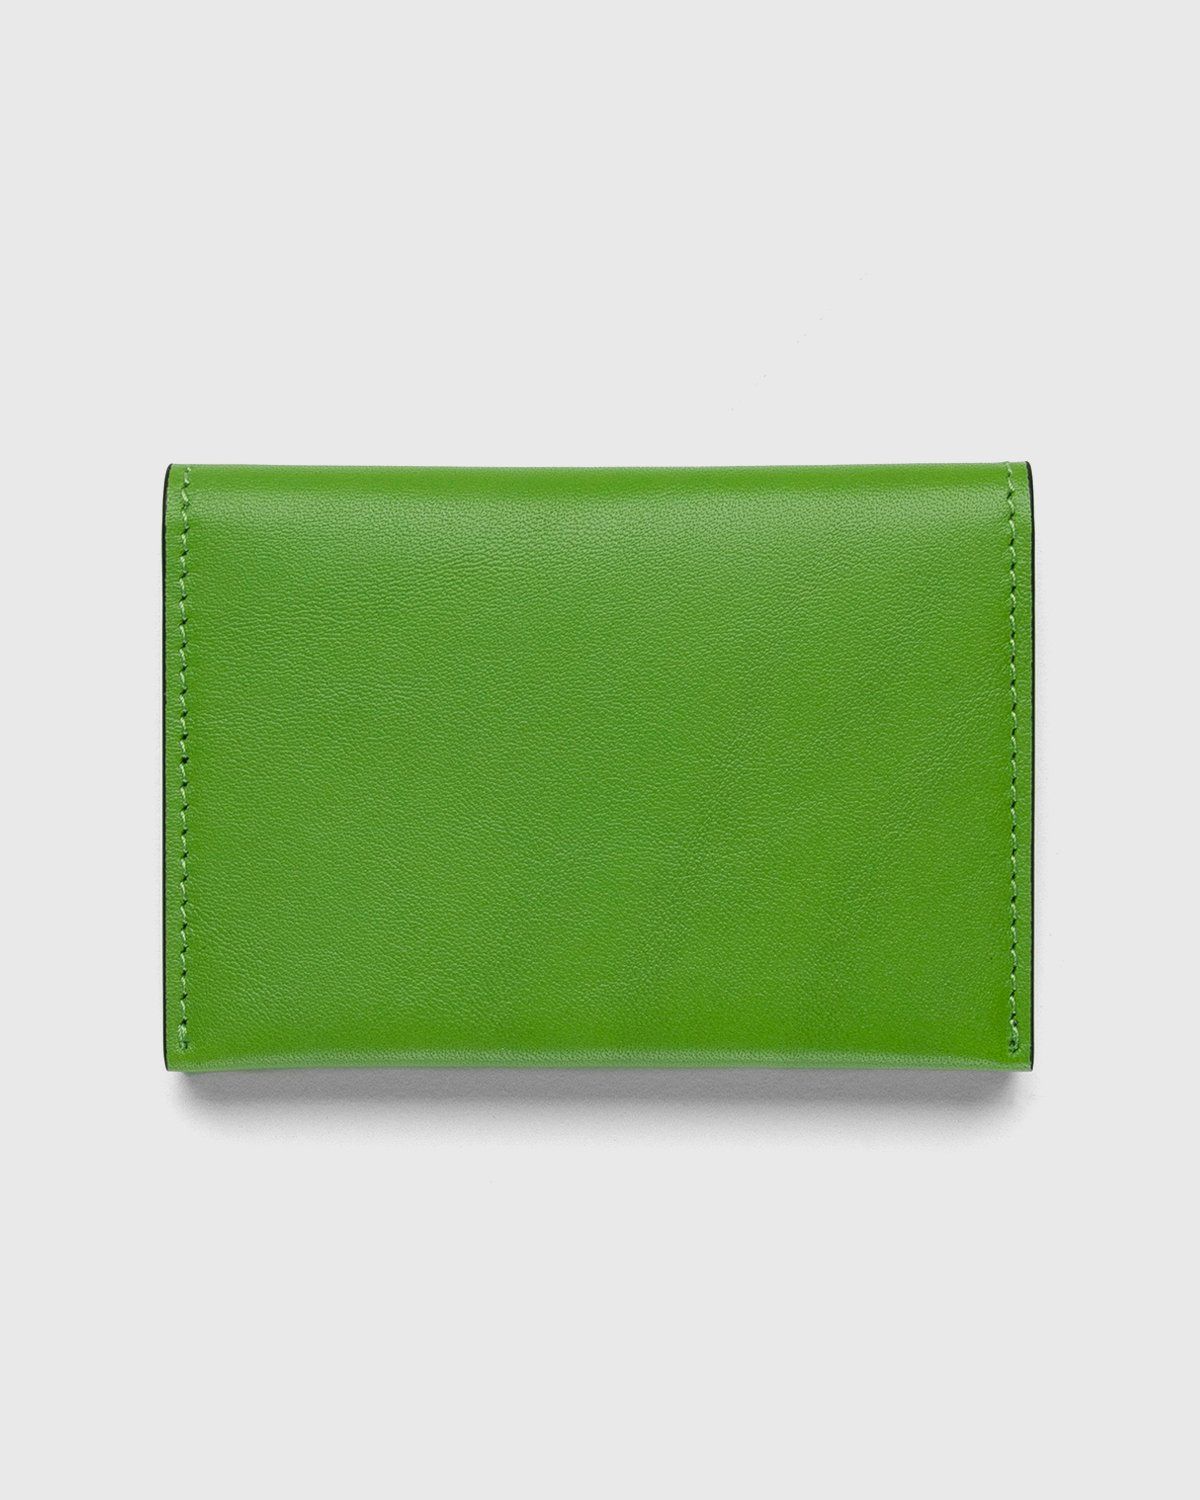 Acne Studios – Leather Card Case Multi Green - Image 2